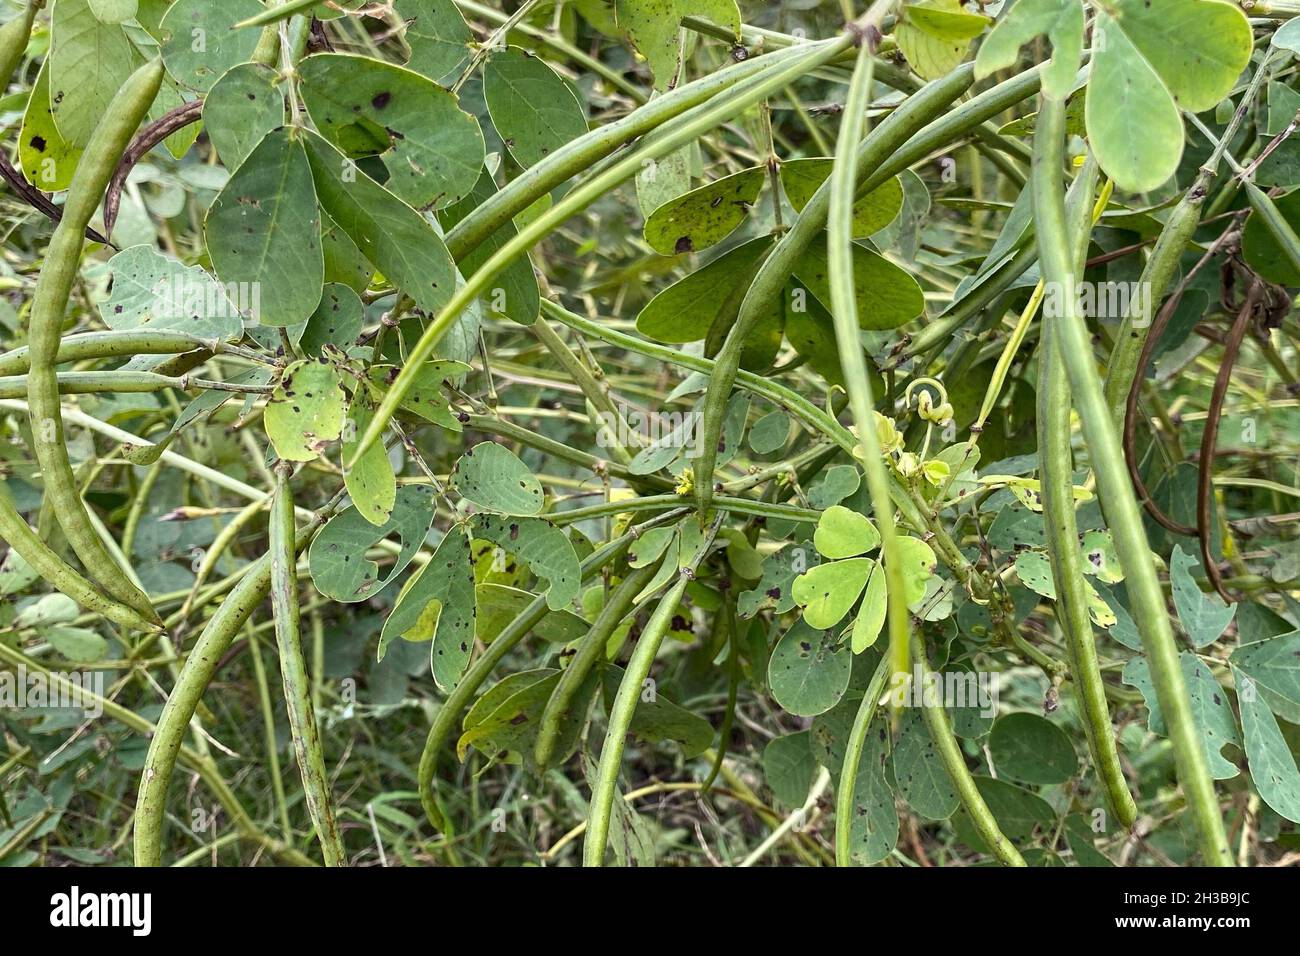 Wild sicklepod (Senna obtusifolia) plants with ripe fruits in autumn season Stock Photo